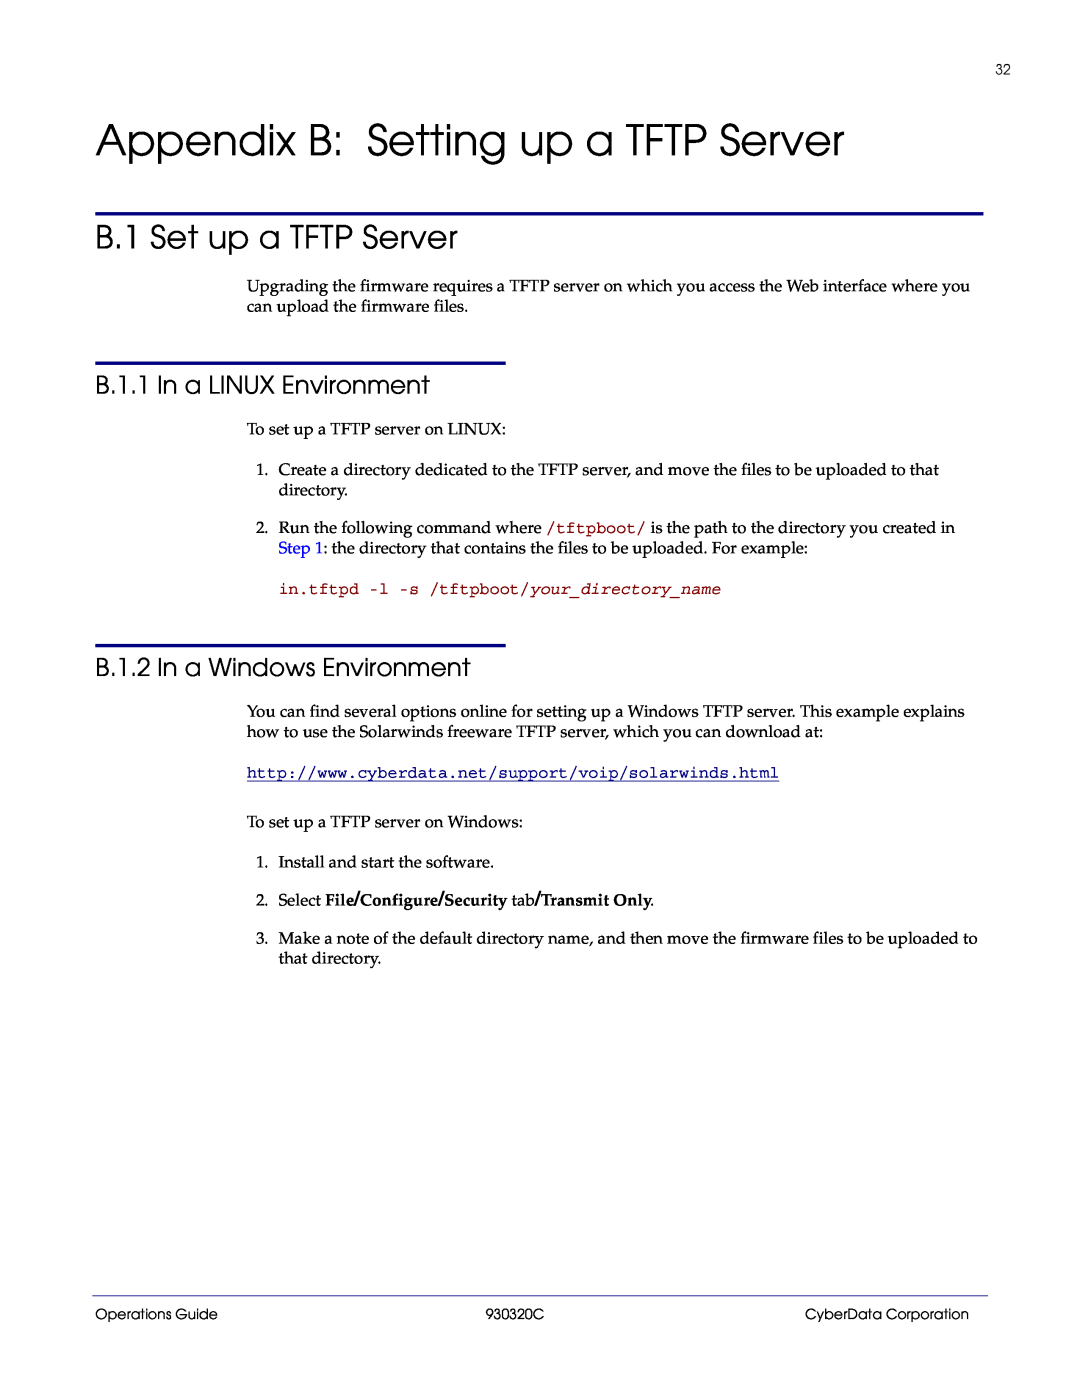 CyberData 11103 manual Appendix B: Setting up a TFTP Server, B.1 Set up a TFTP Server, B.1.1 In a LINUX Environment 